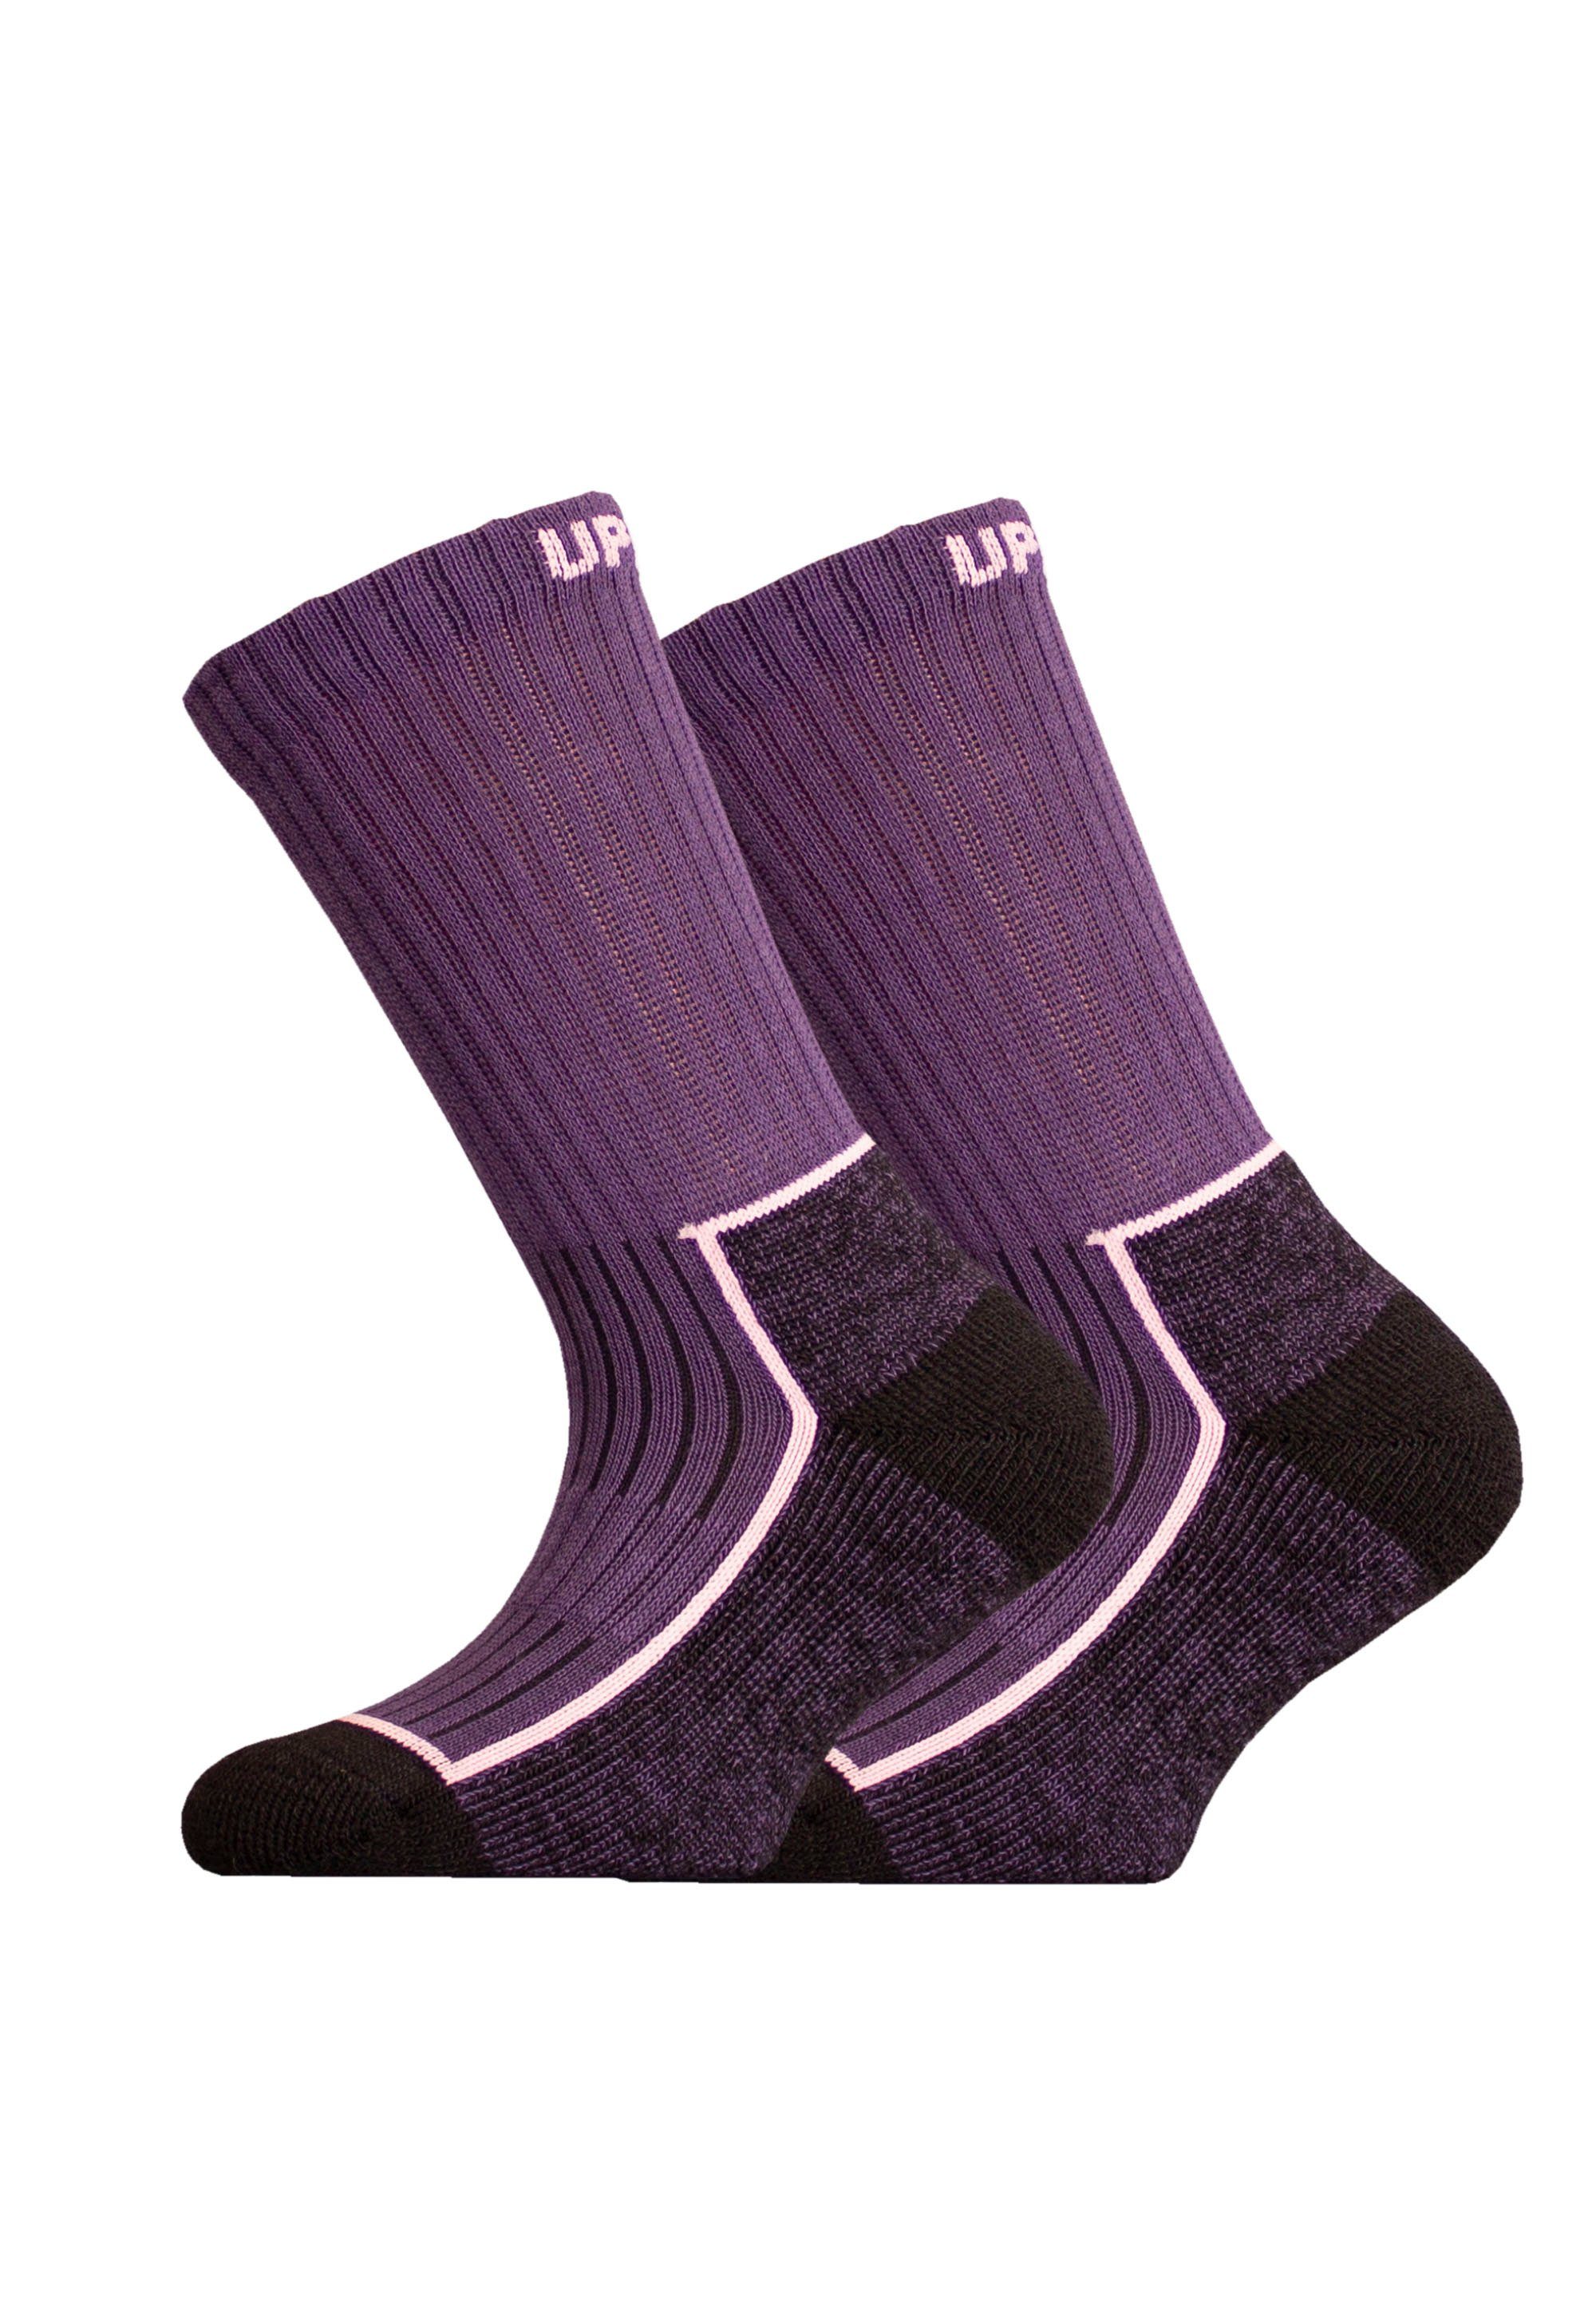 UphillSport Socken SAANA JR 2er Pack (2-Paar) mit Flextech-Struktur lila